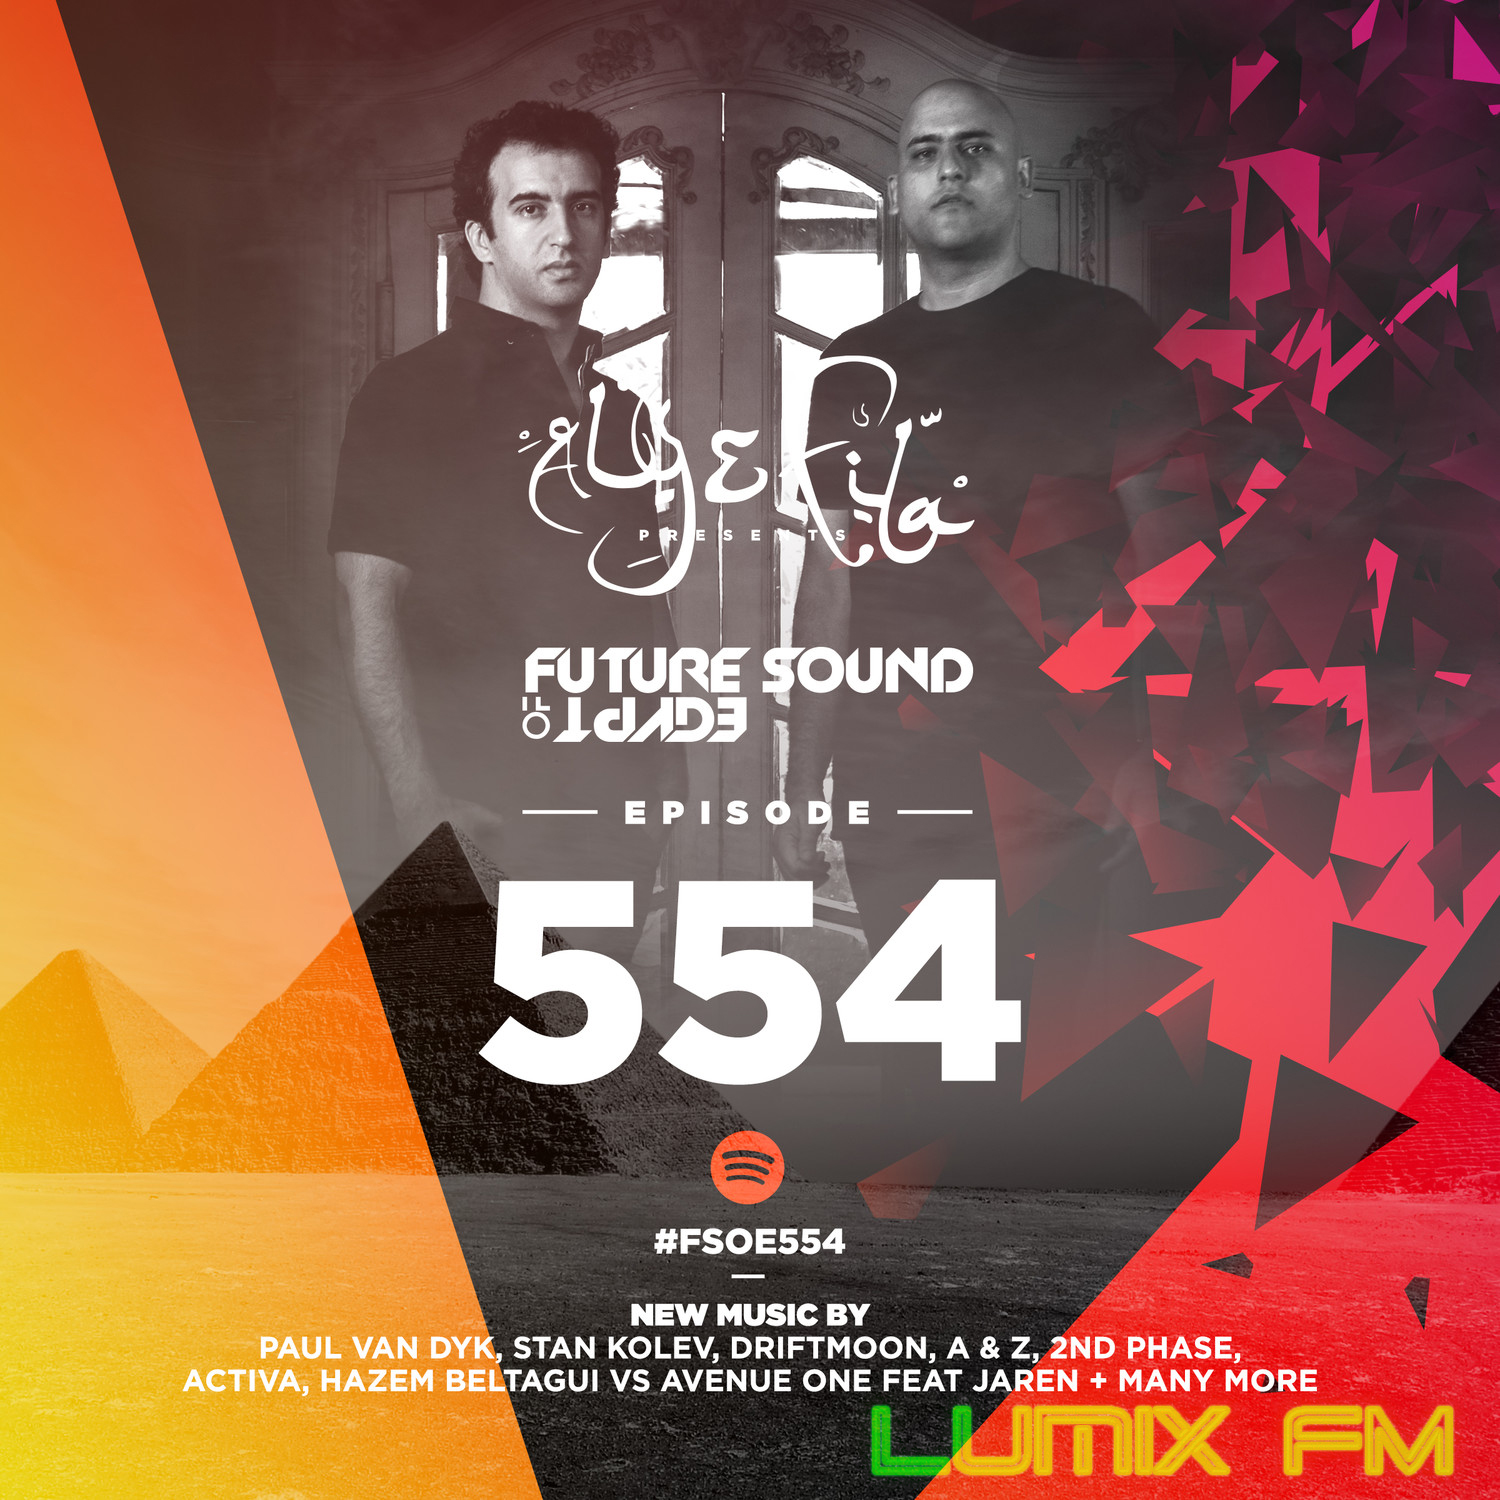 Future Sound of Egypt #554 with Aly & Fila